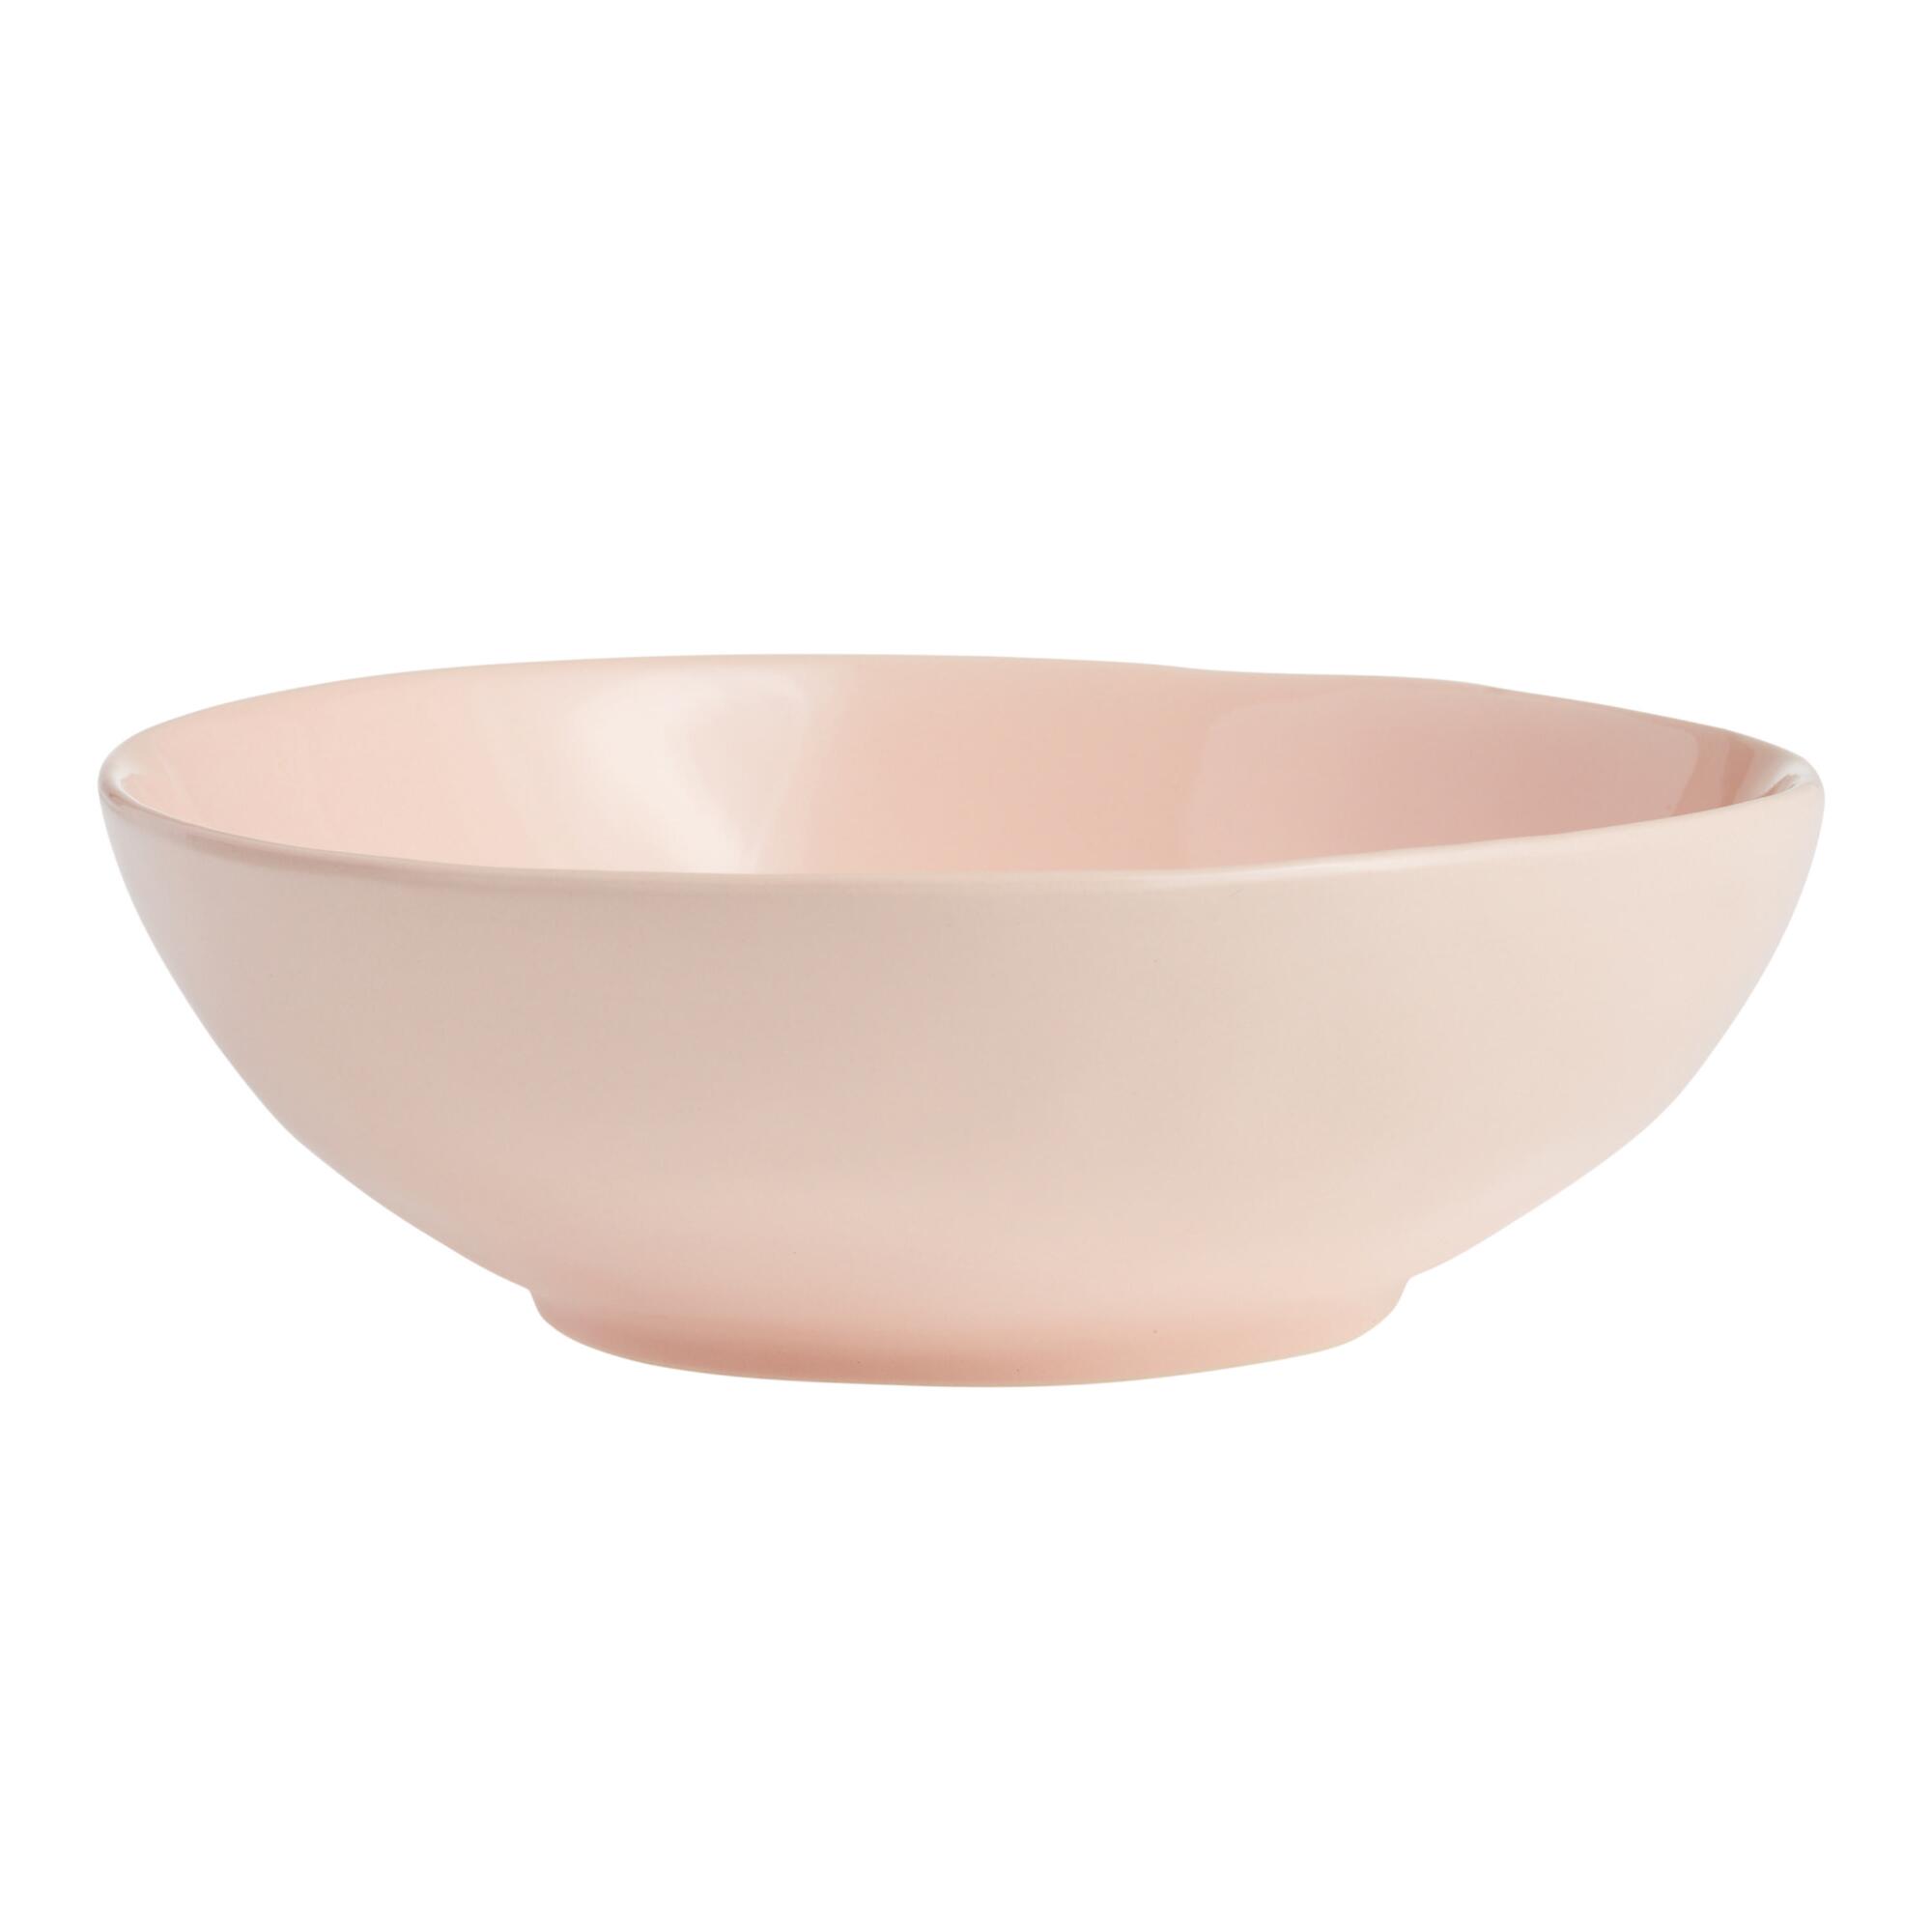 Blush Element Cereal Bowls Set Of 4: Pink - Stoneware by World Market